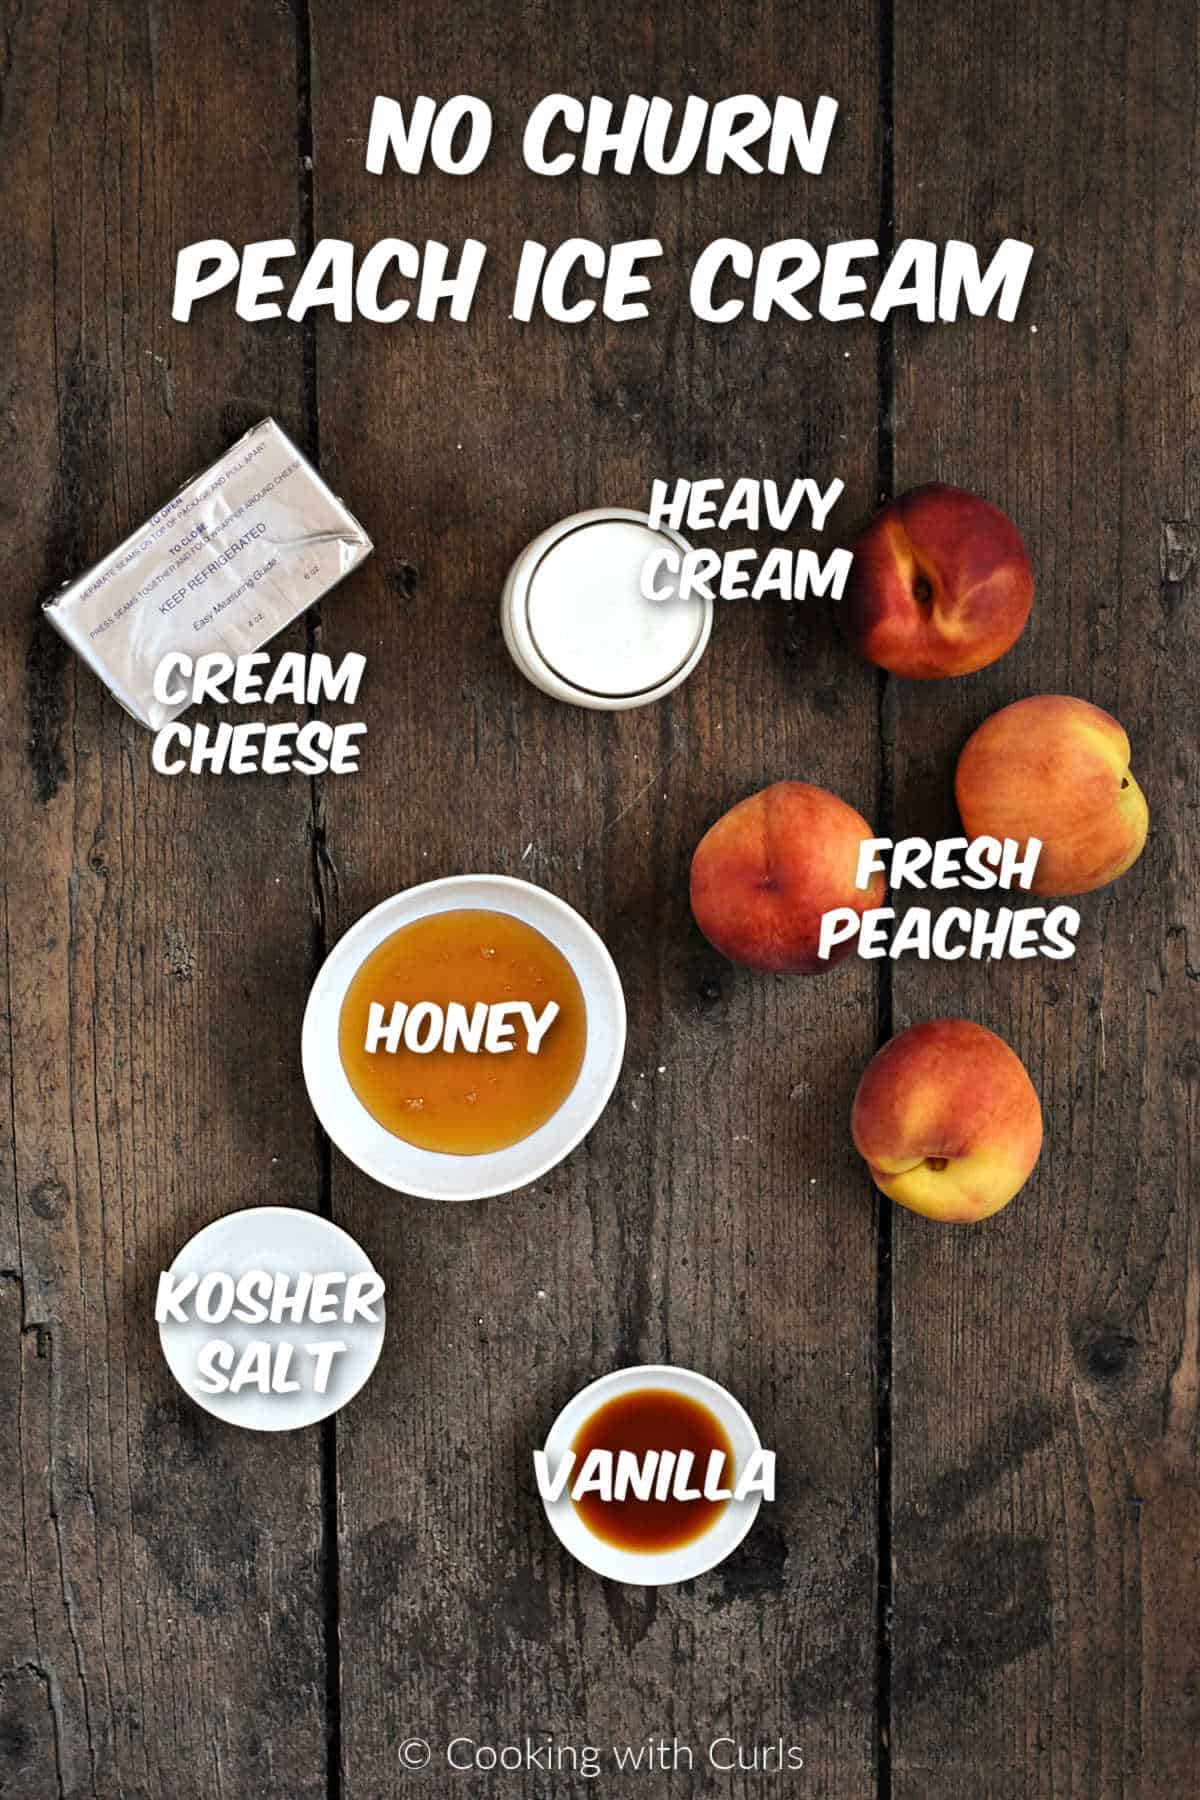 Ingredients to make no churn peach ice cream.